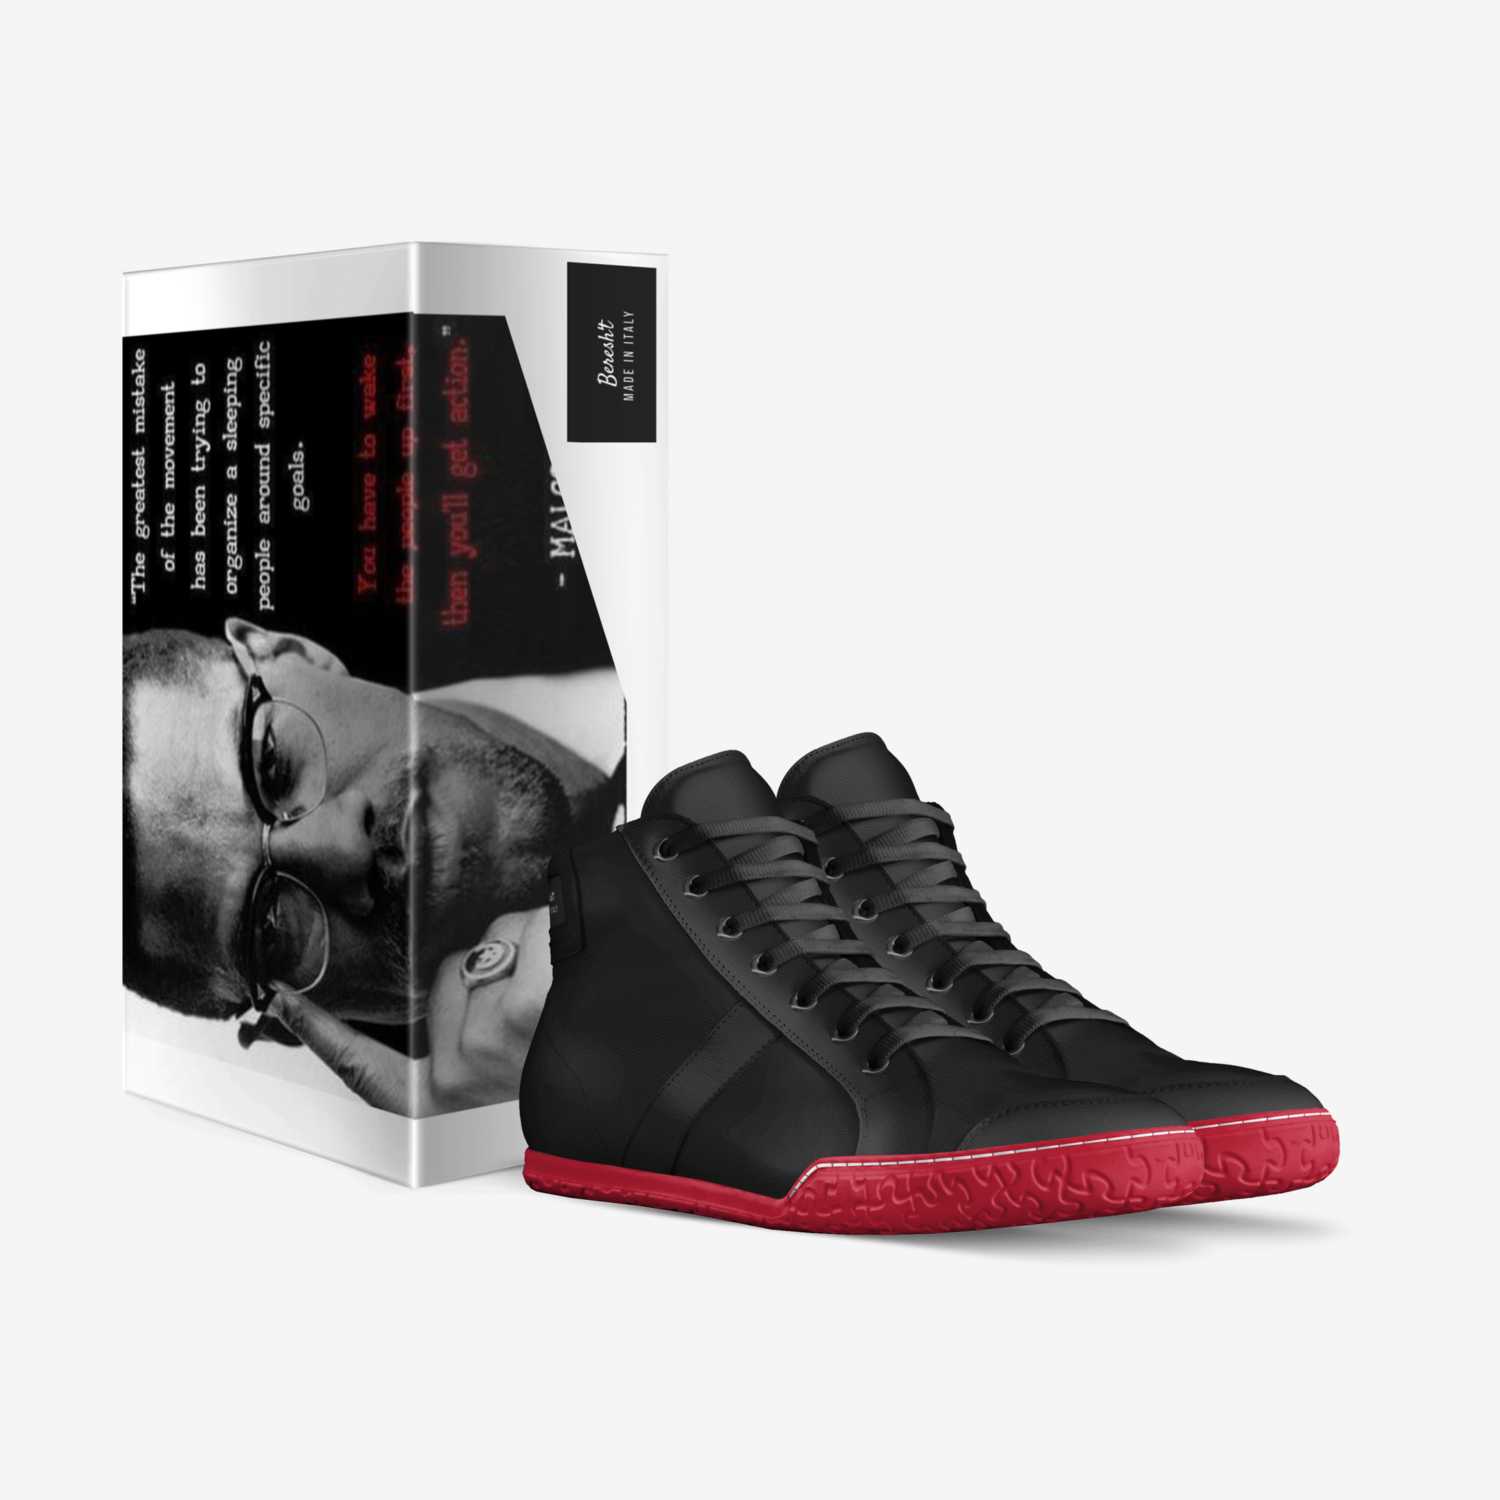 Beresh't custom made in Italy shoes by Adamas Bartholomew-Bey | Box view